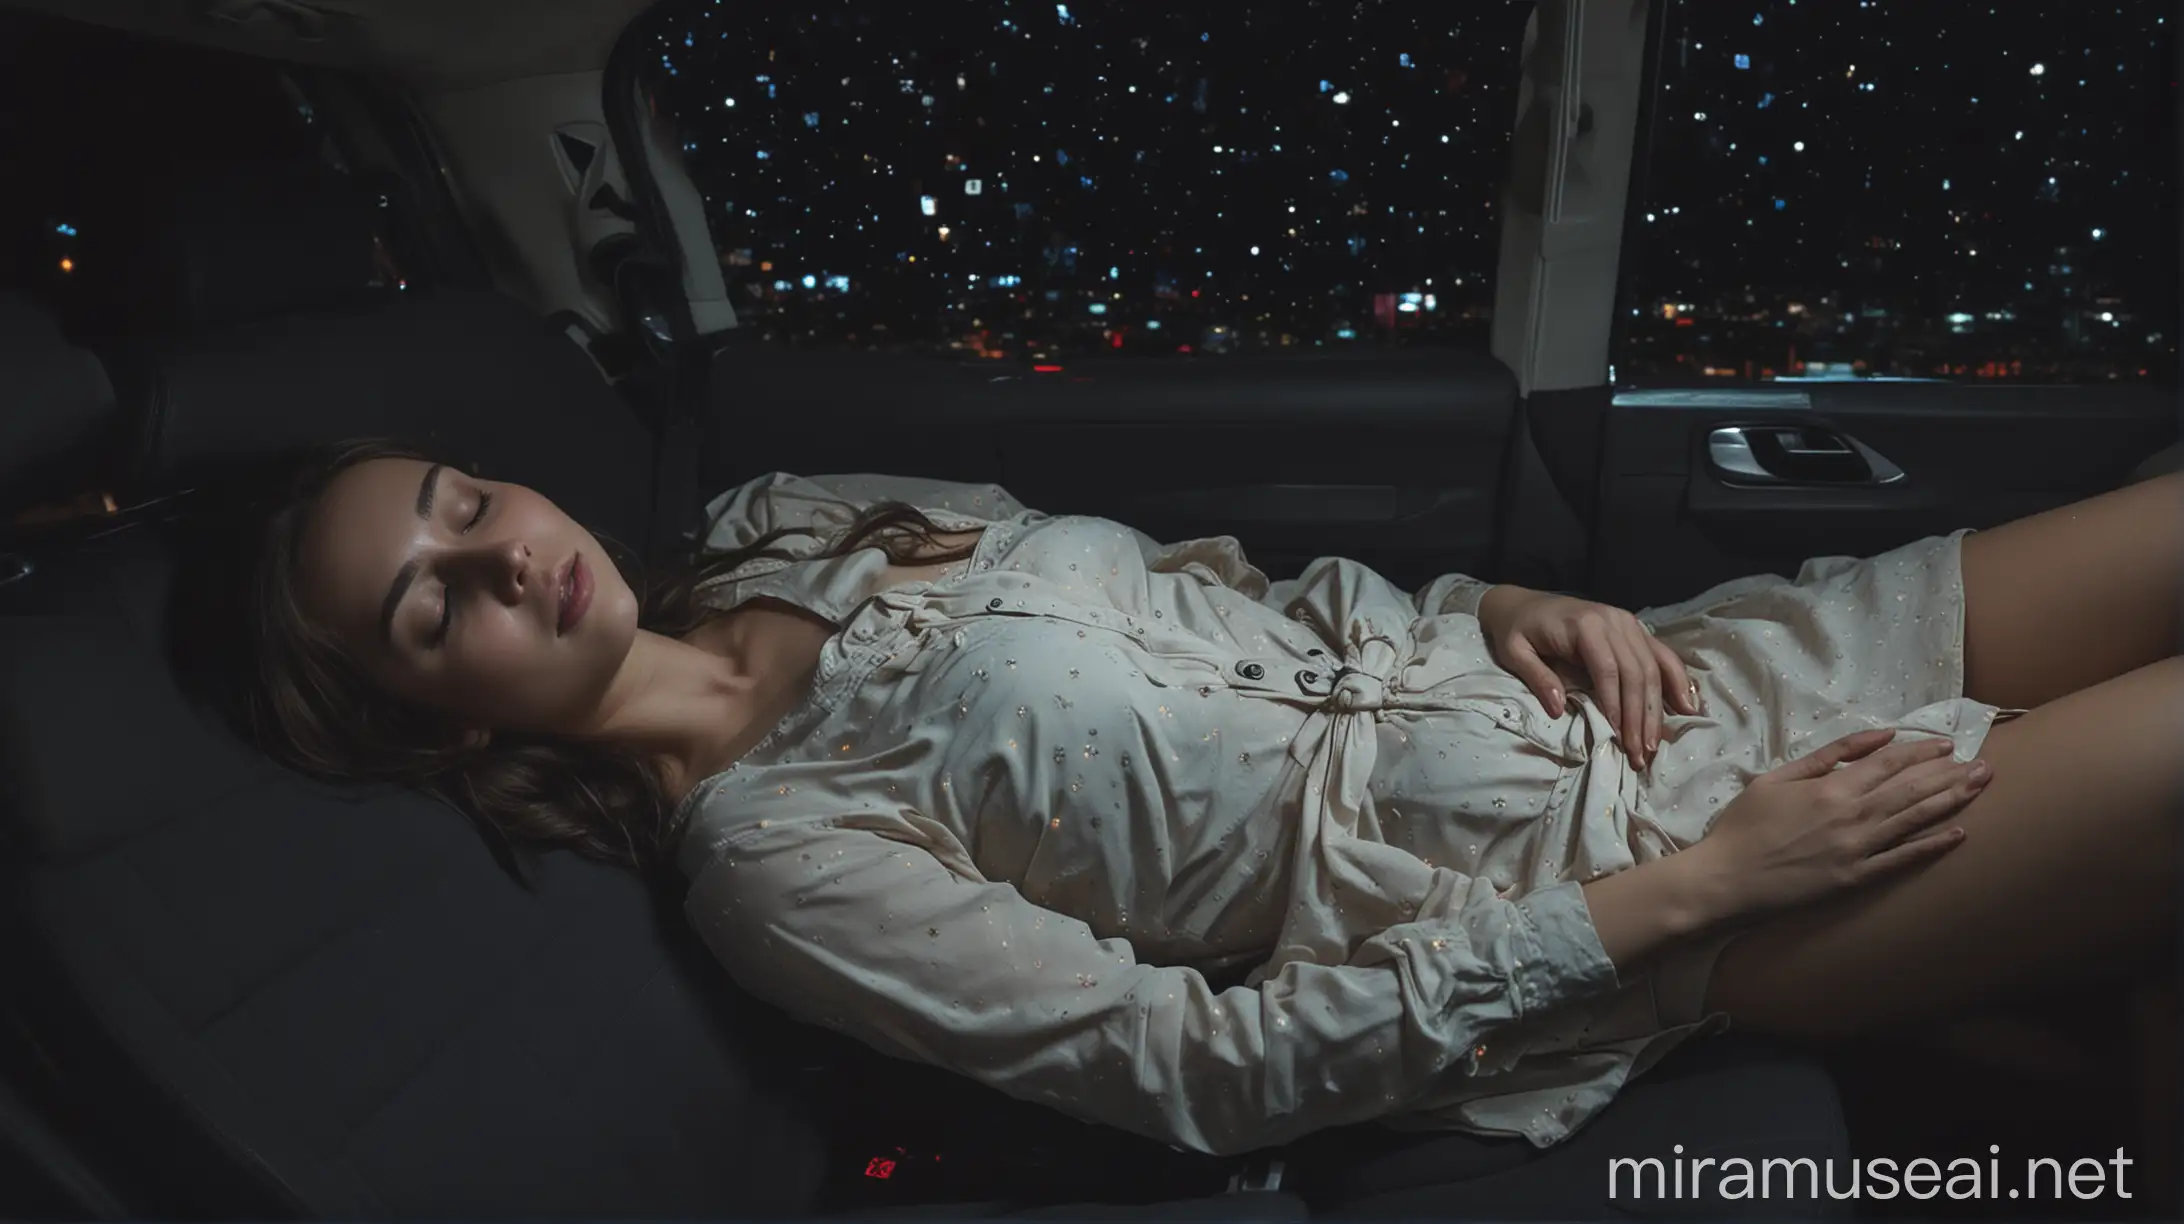 Wanita cantik tertidur pulas posisi tidur selonjor full body di dalam mobil di malam hari